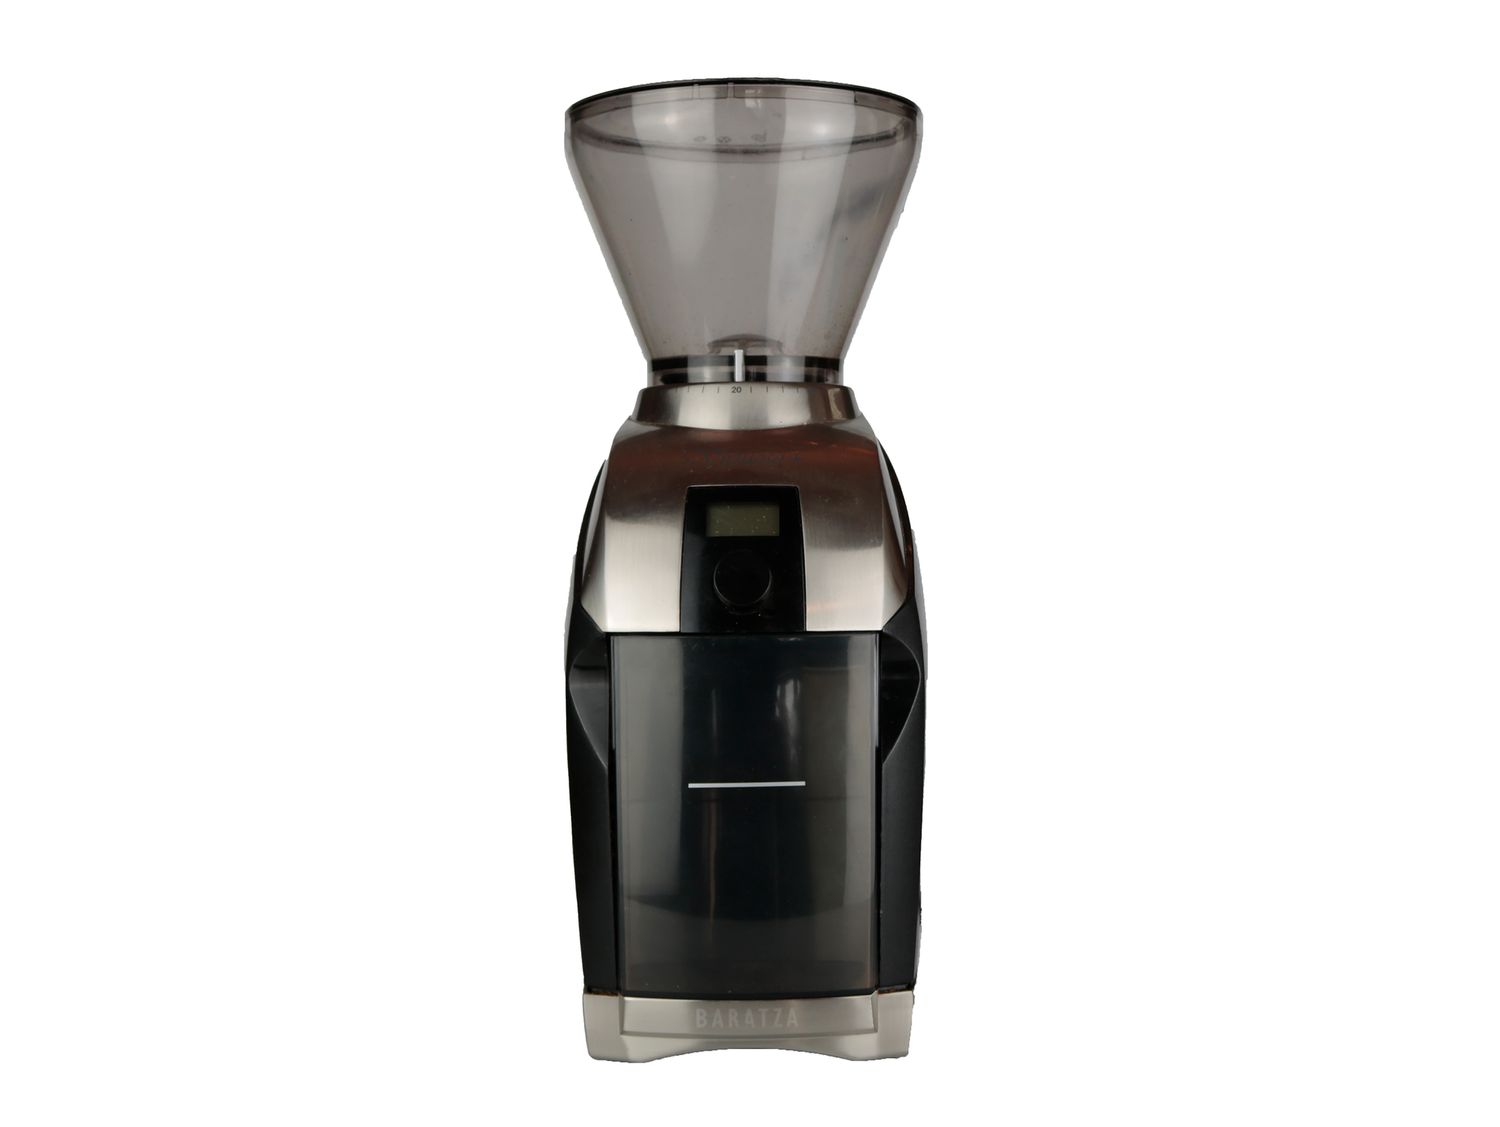 The Baratza Virtuoso+ coffee grinder on a white background